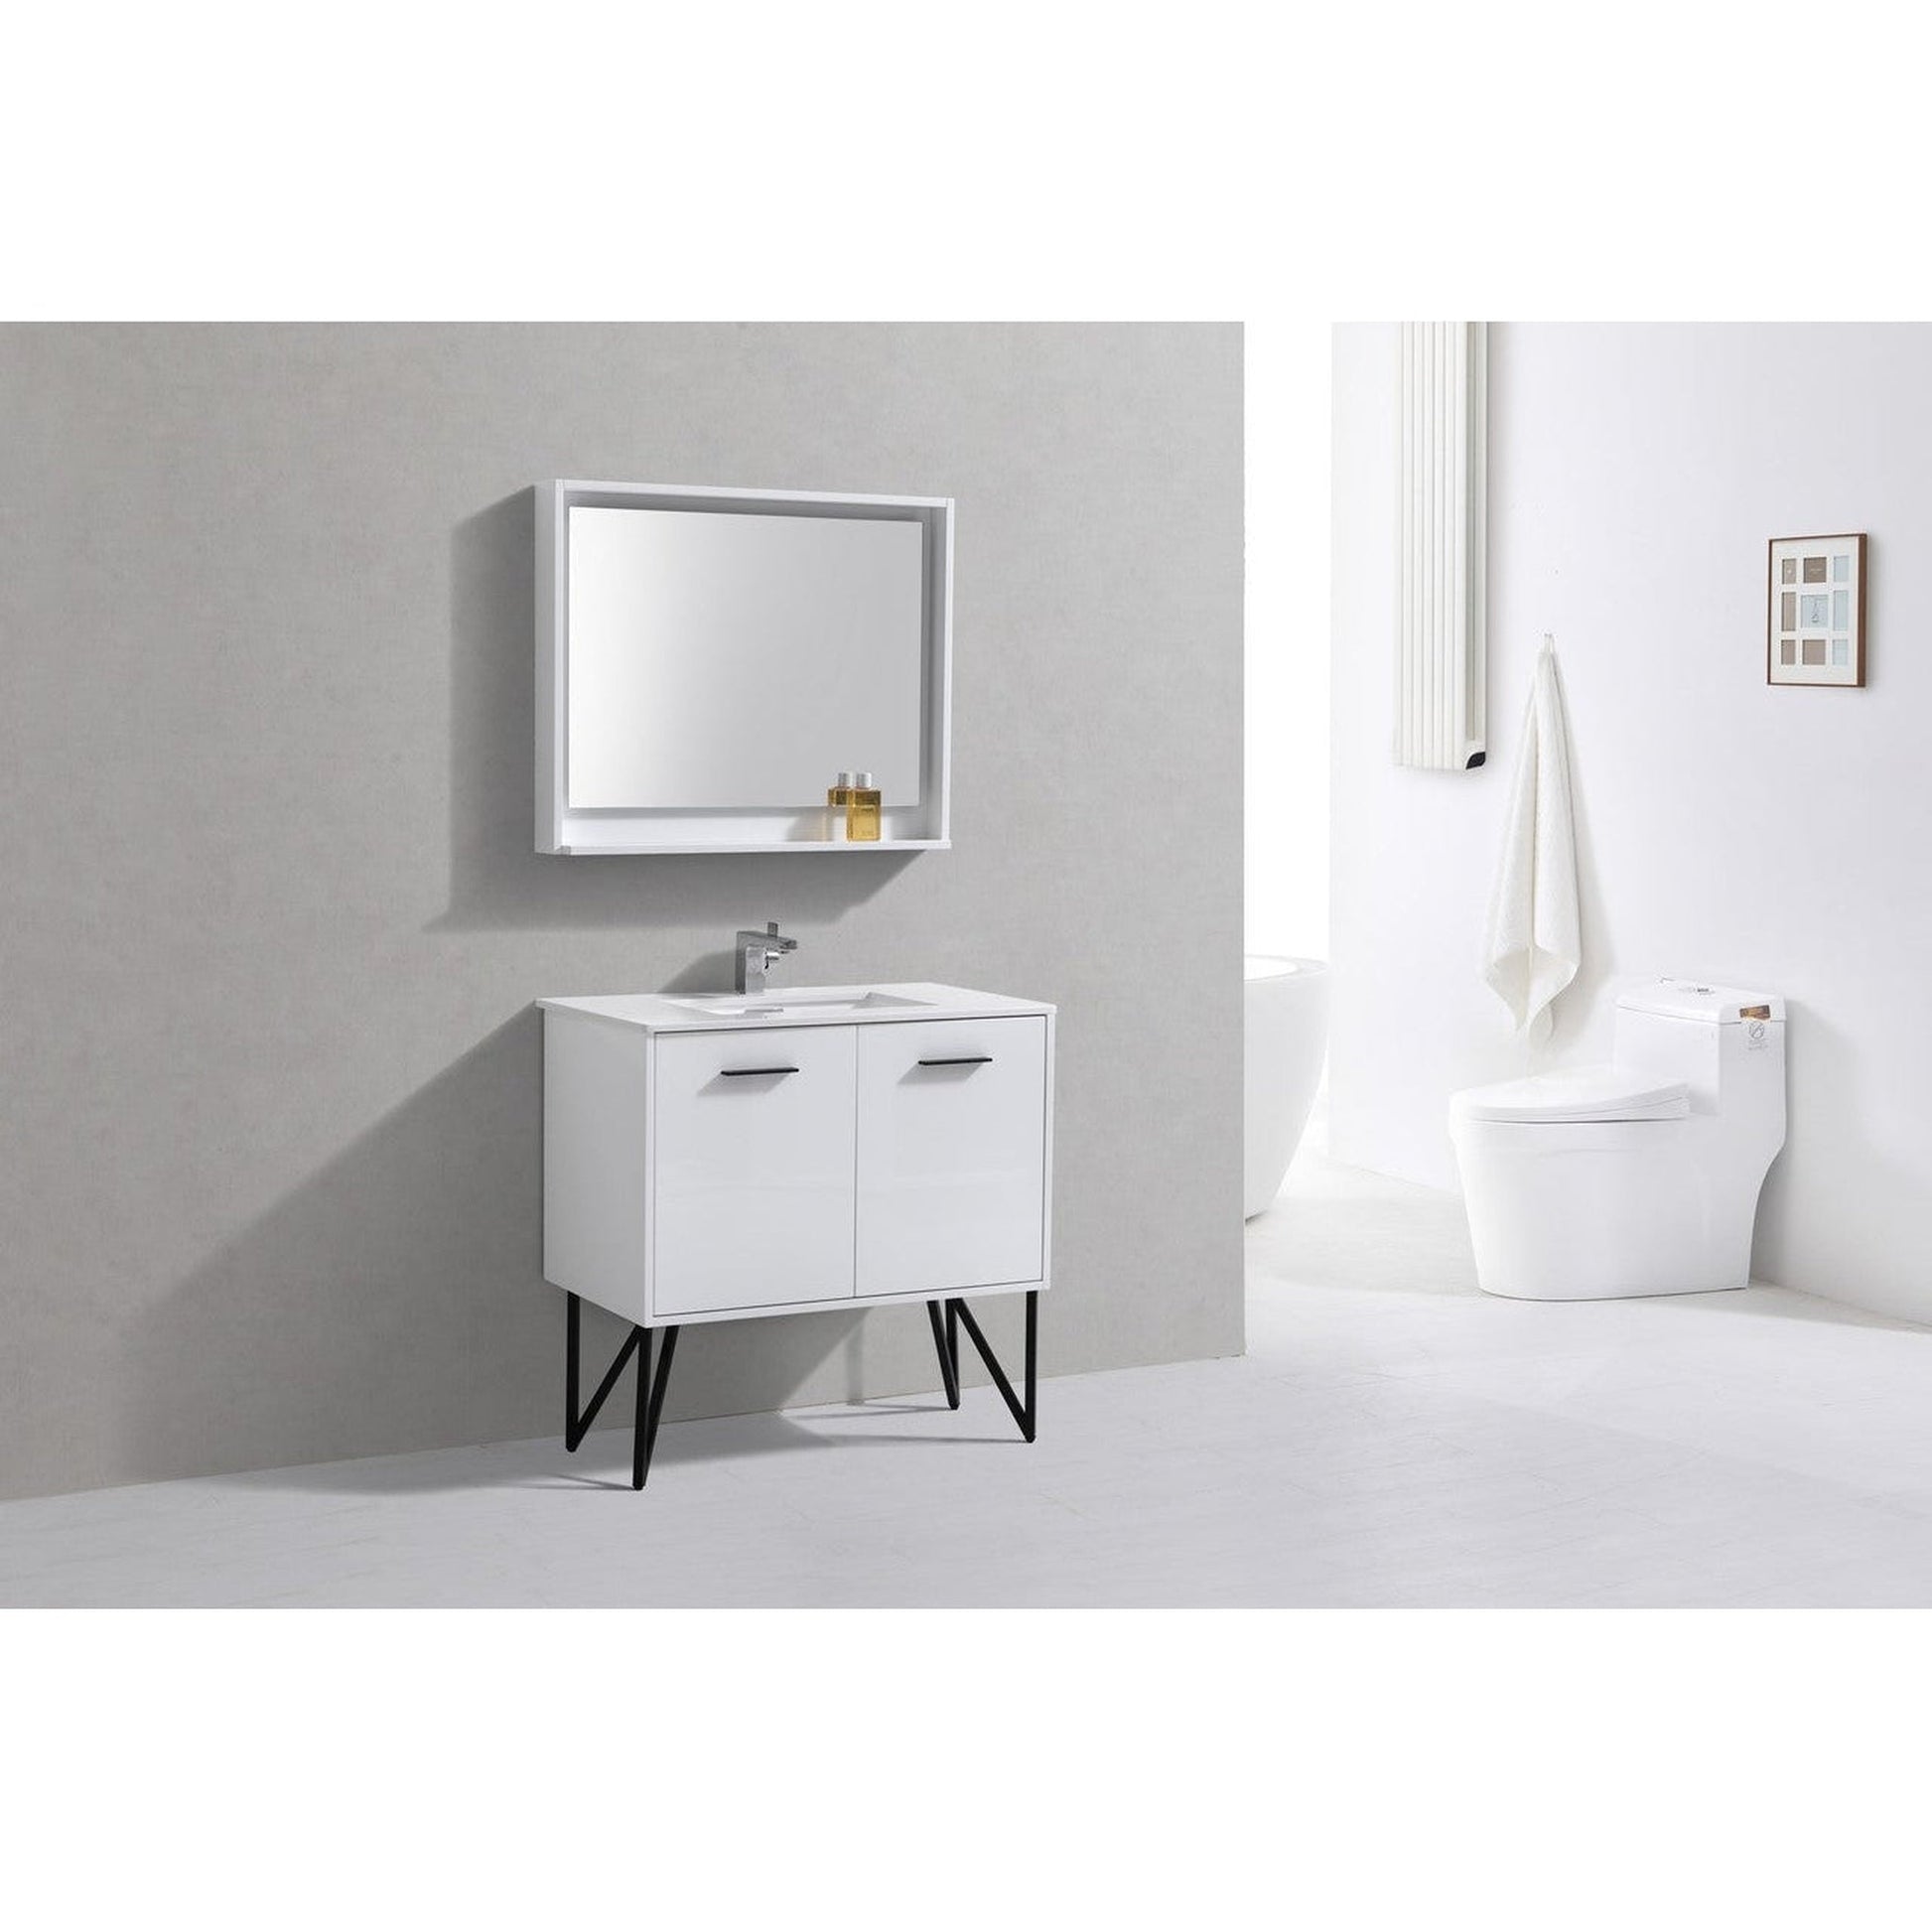 KubeBath Bosco 36" High Gloss White Modern Freestanding Bathroom Vanity With Single Undermount Sink With Overflow and 36" White Framed Mirror